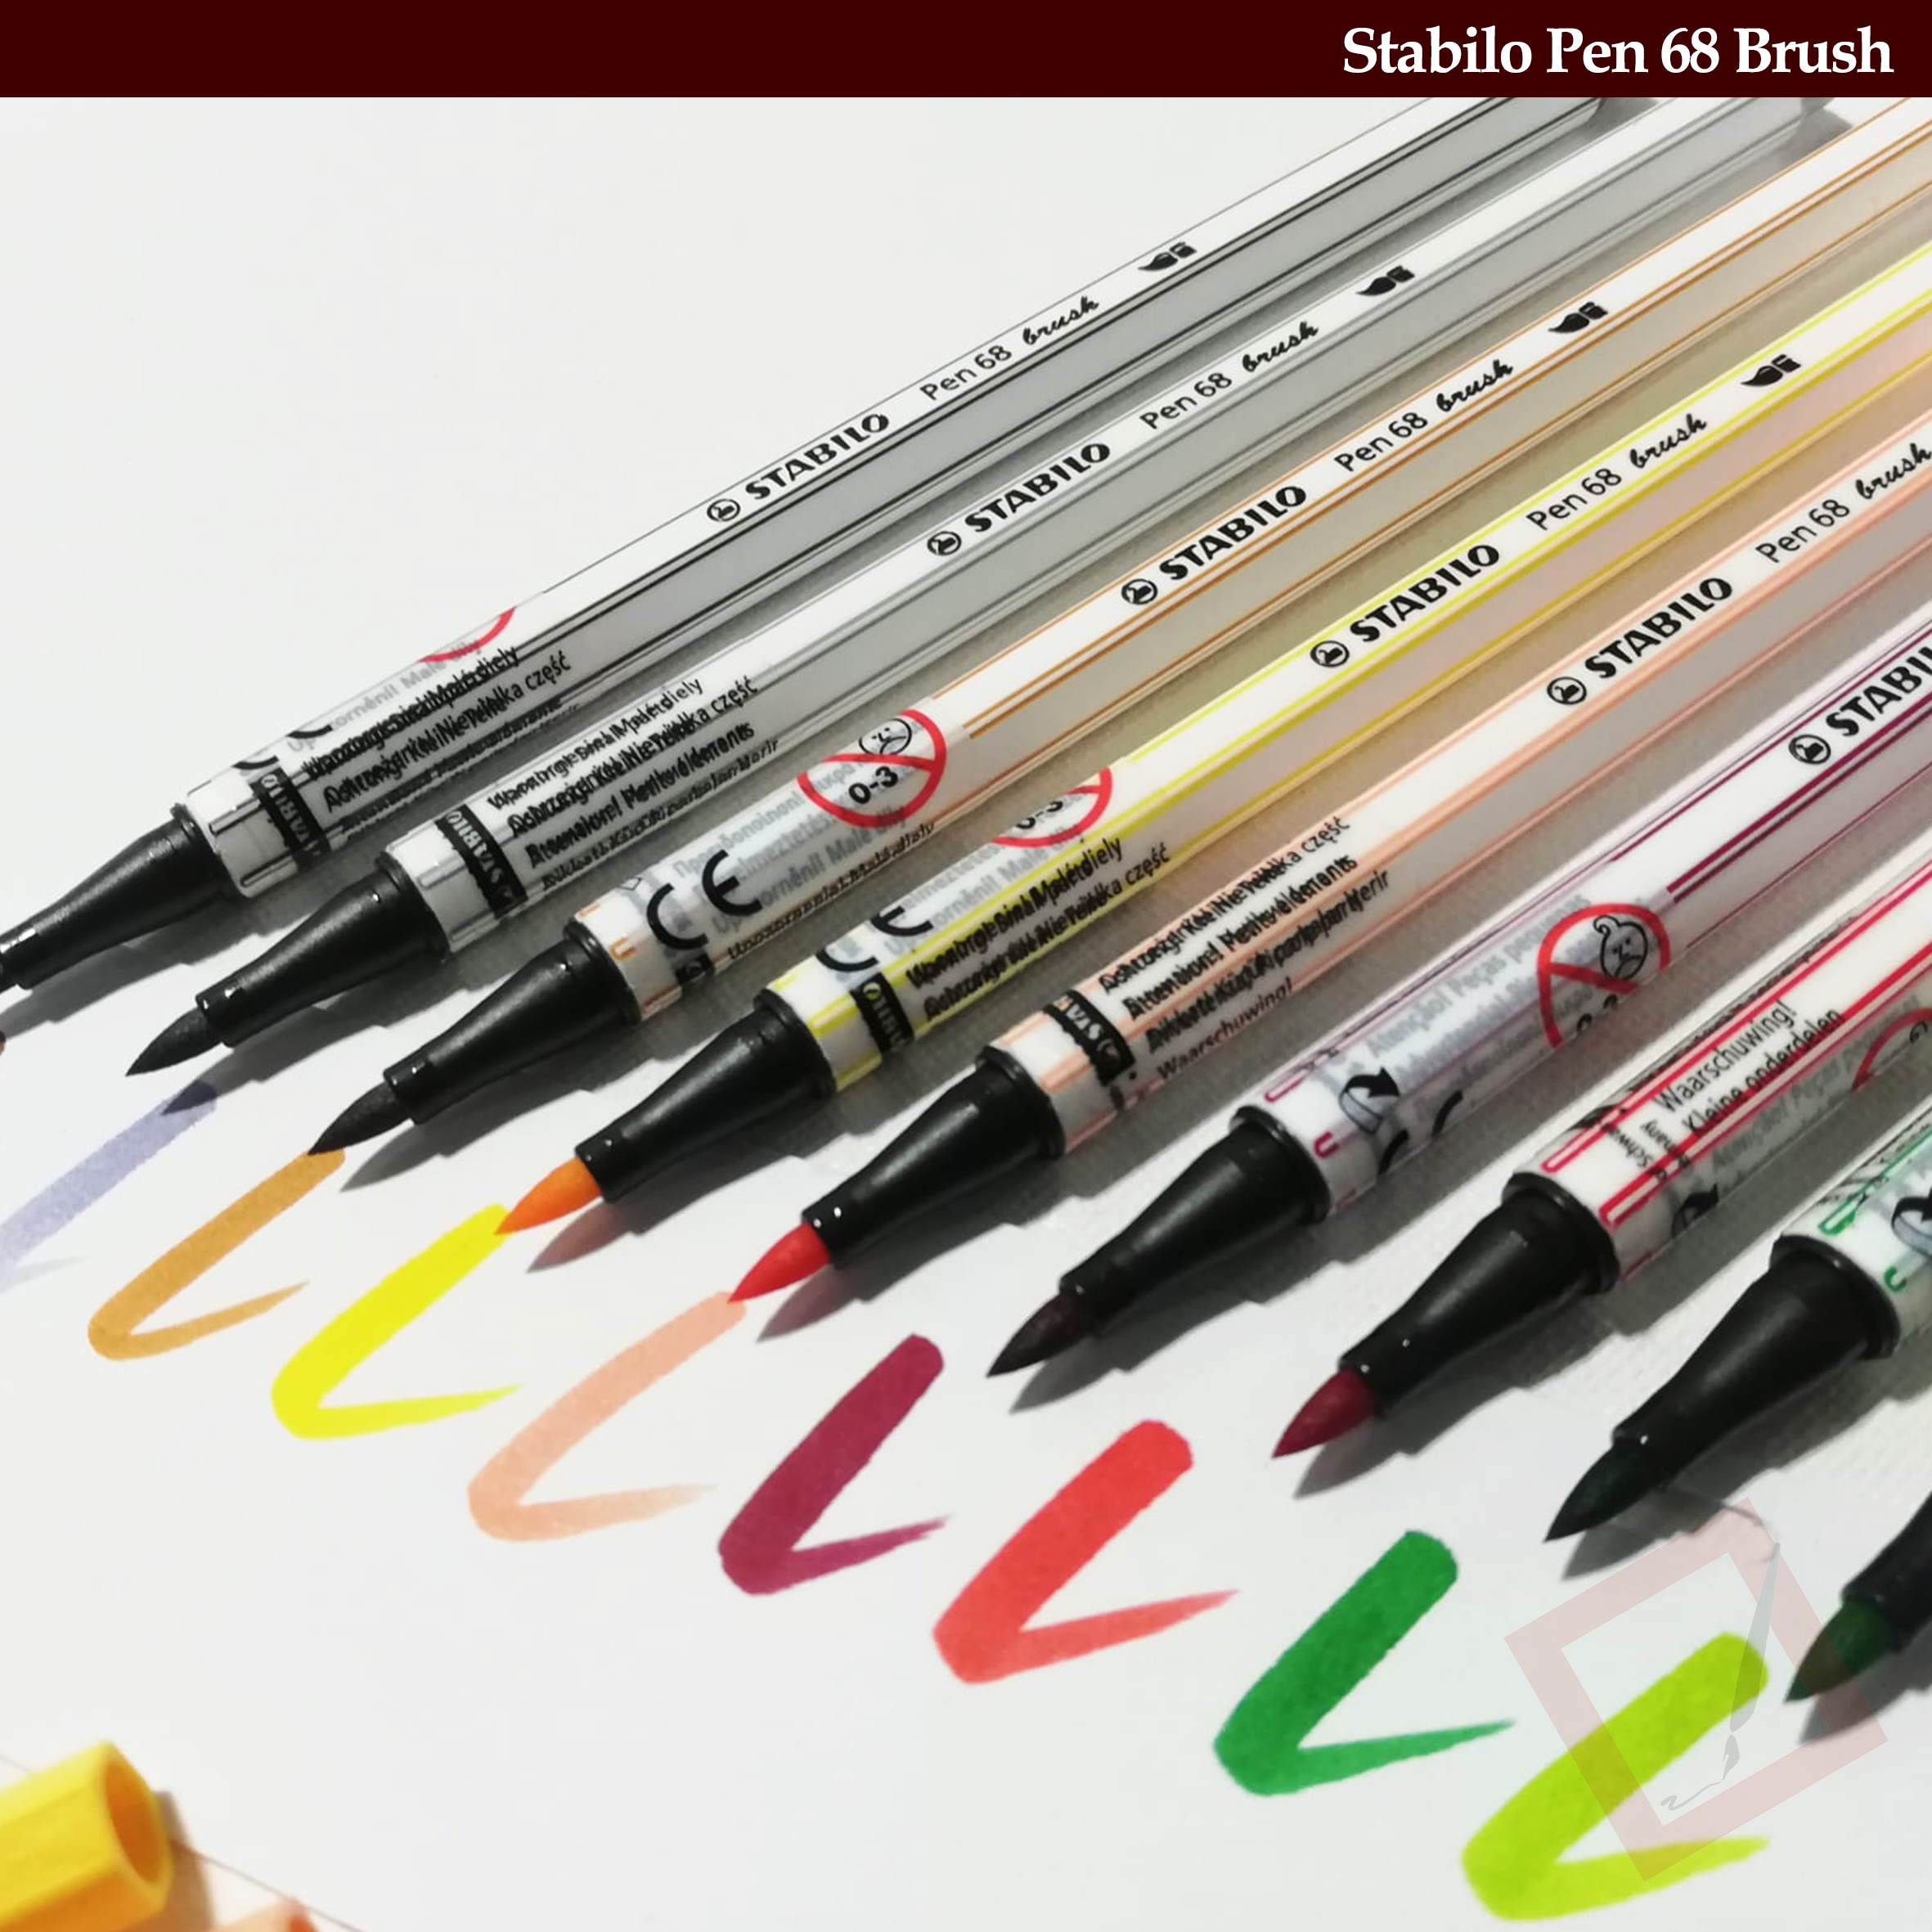 Pen 68 brush Stabilo – PRECISE